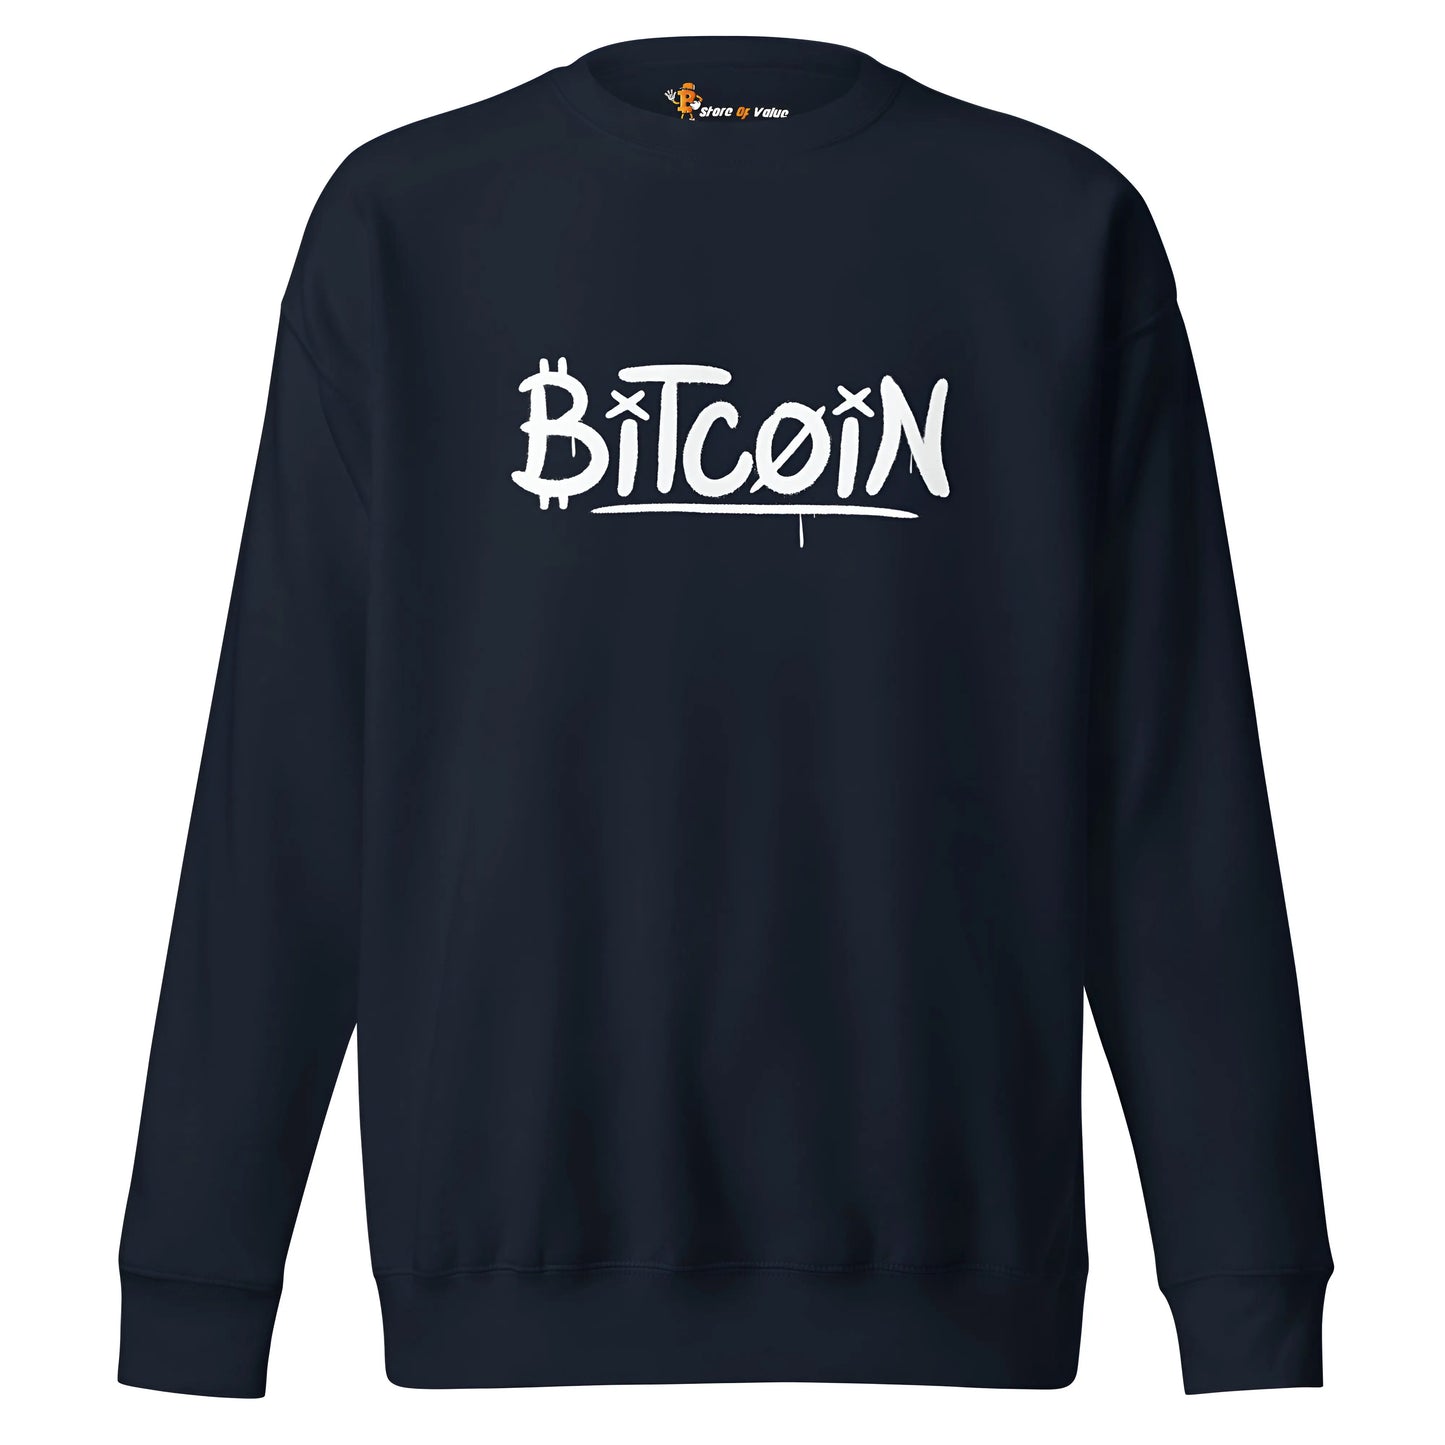 Graffity Street Art Bitcoin - Premium Unisex Bitcoin Sweatshirt Navy Color